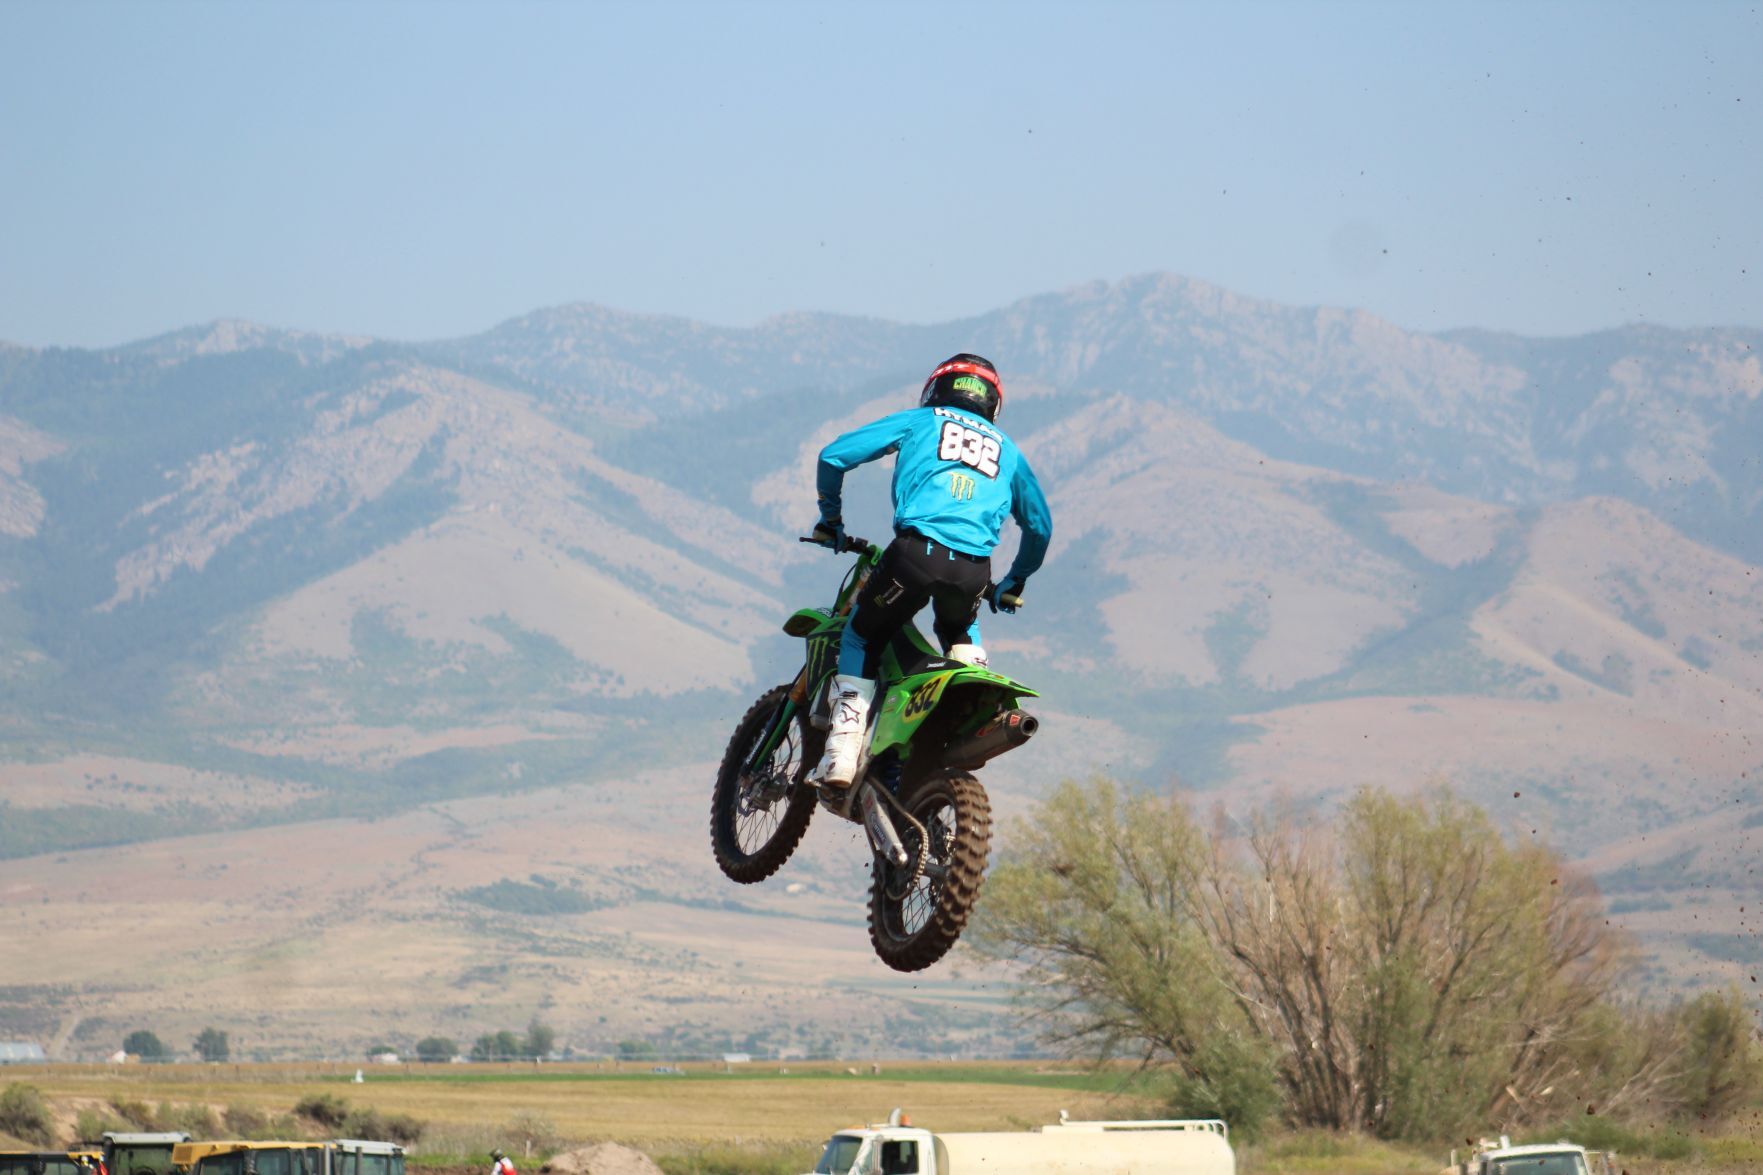 Fairviews field of dreams helped put Idaho on motocross map Local News hjnews